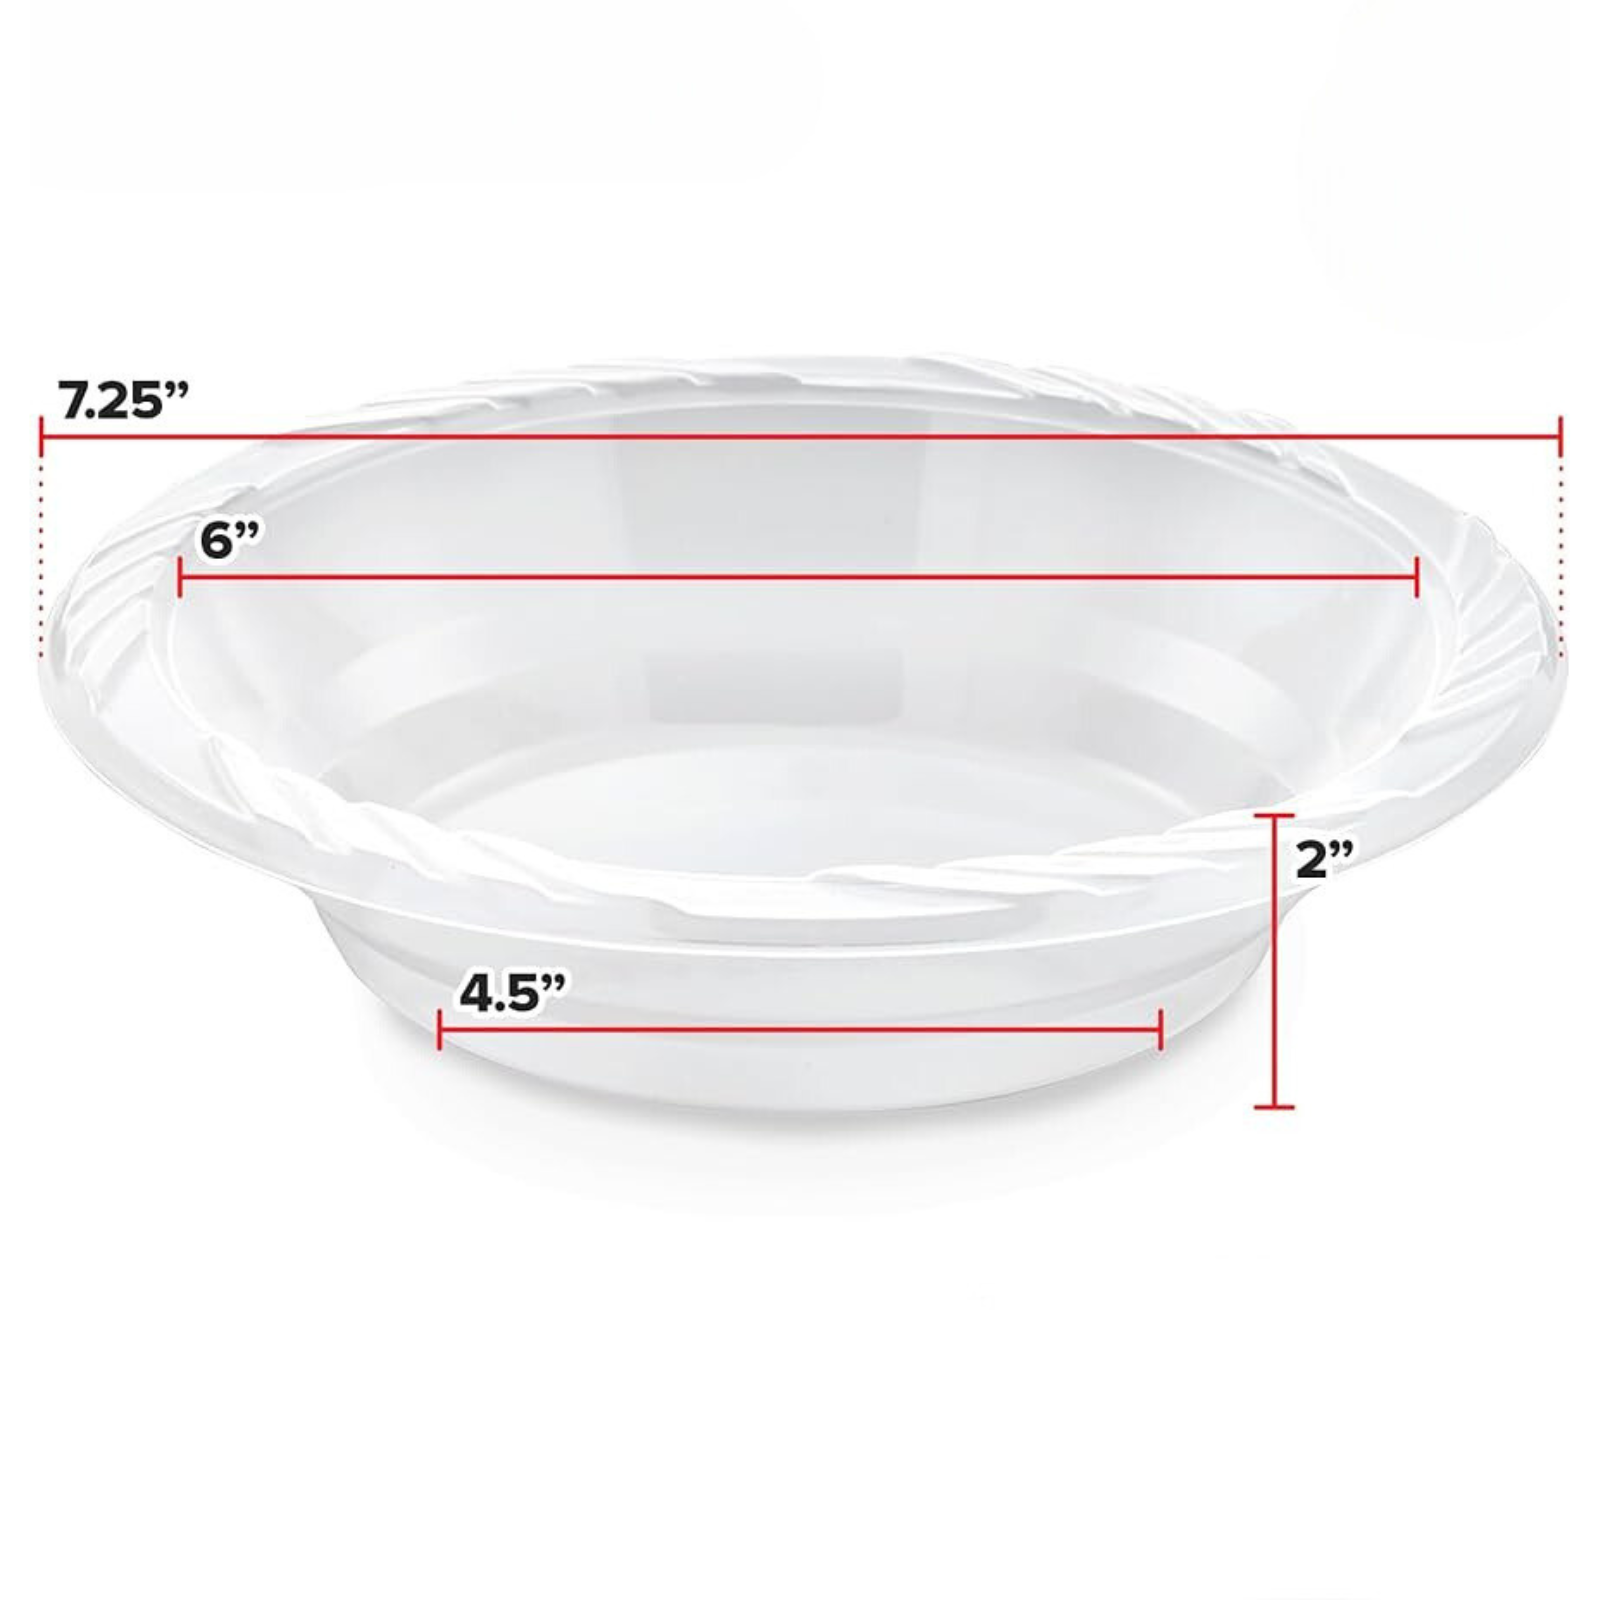 *WHOLESALE* 18 oz. Disposable and Lightweight White Dessert Bowls | 800 ct/case Bowls VeZee   